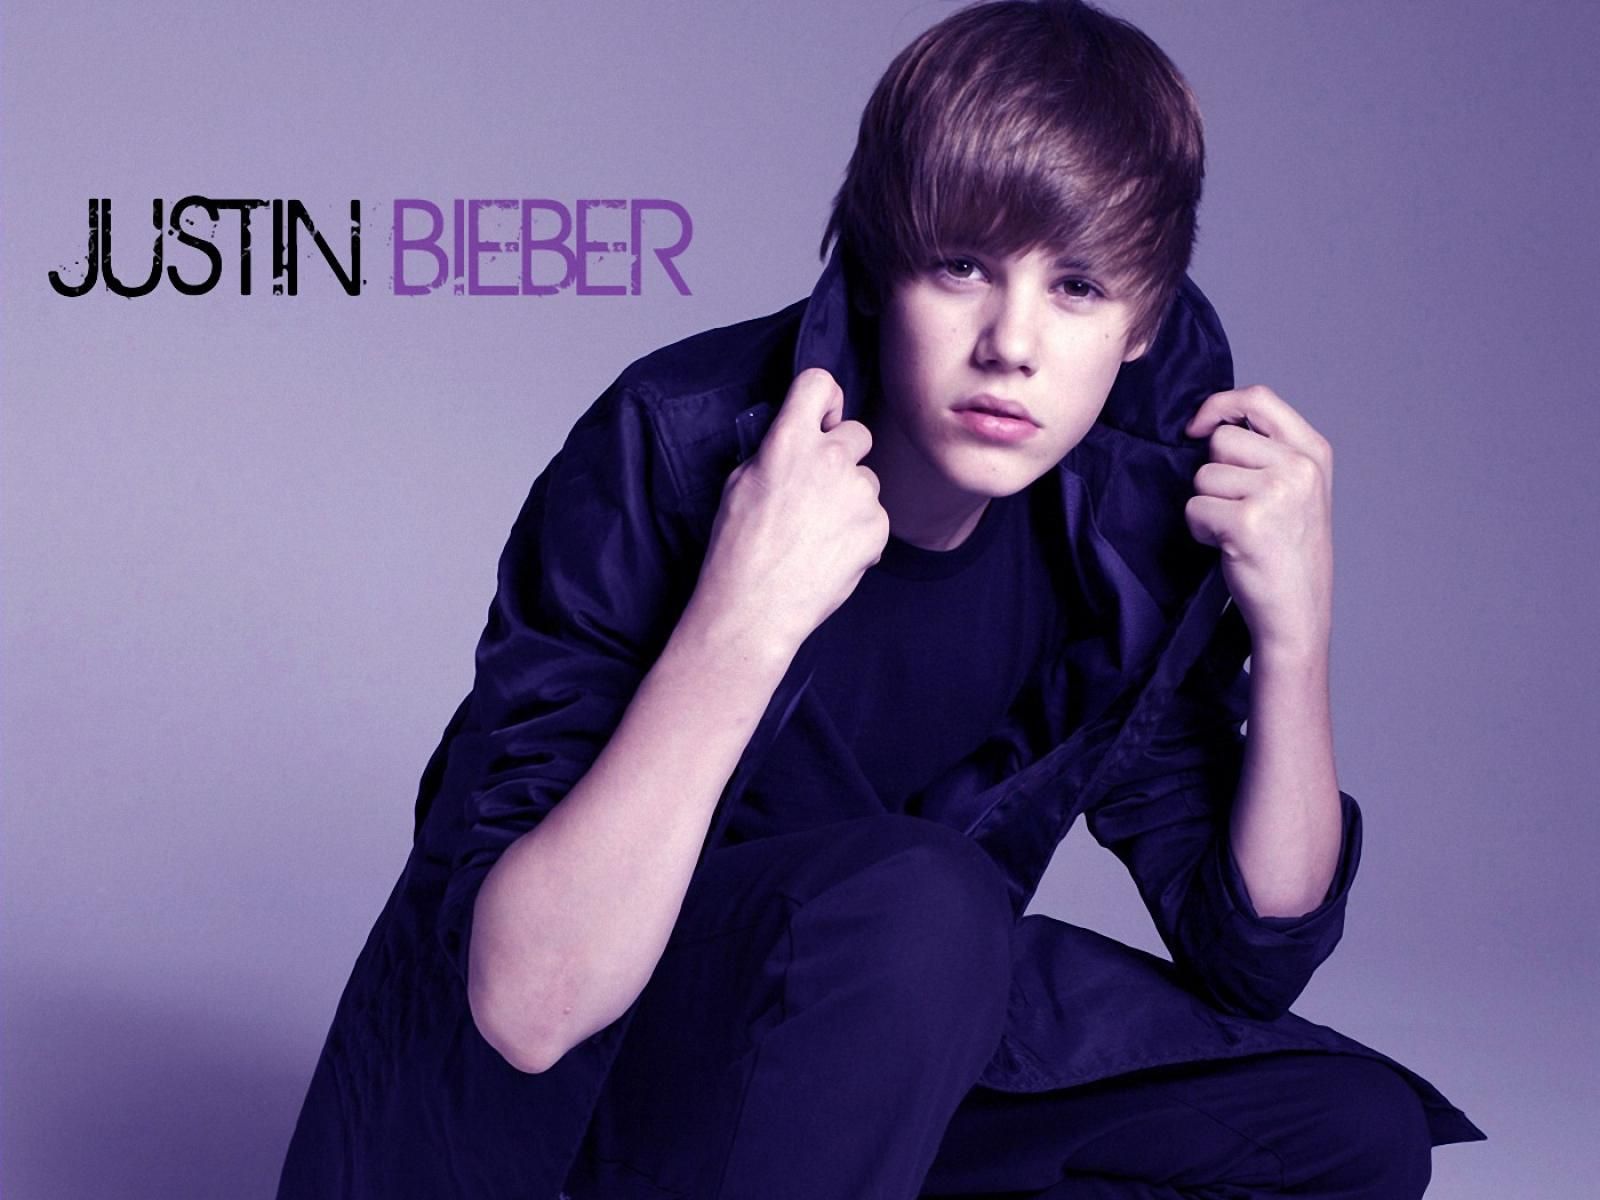 Justin-Bieber-Wallpaper-Handsome-And-Cute-2014.jpg